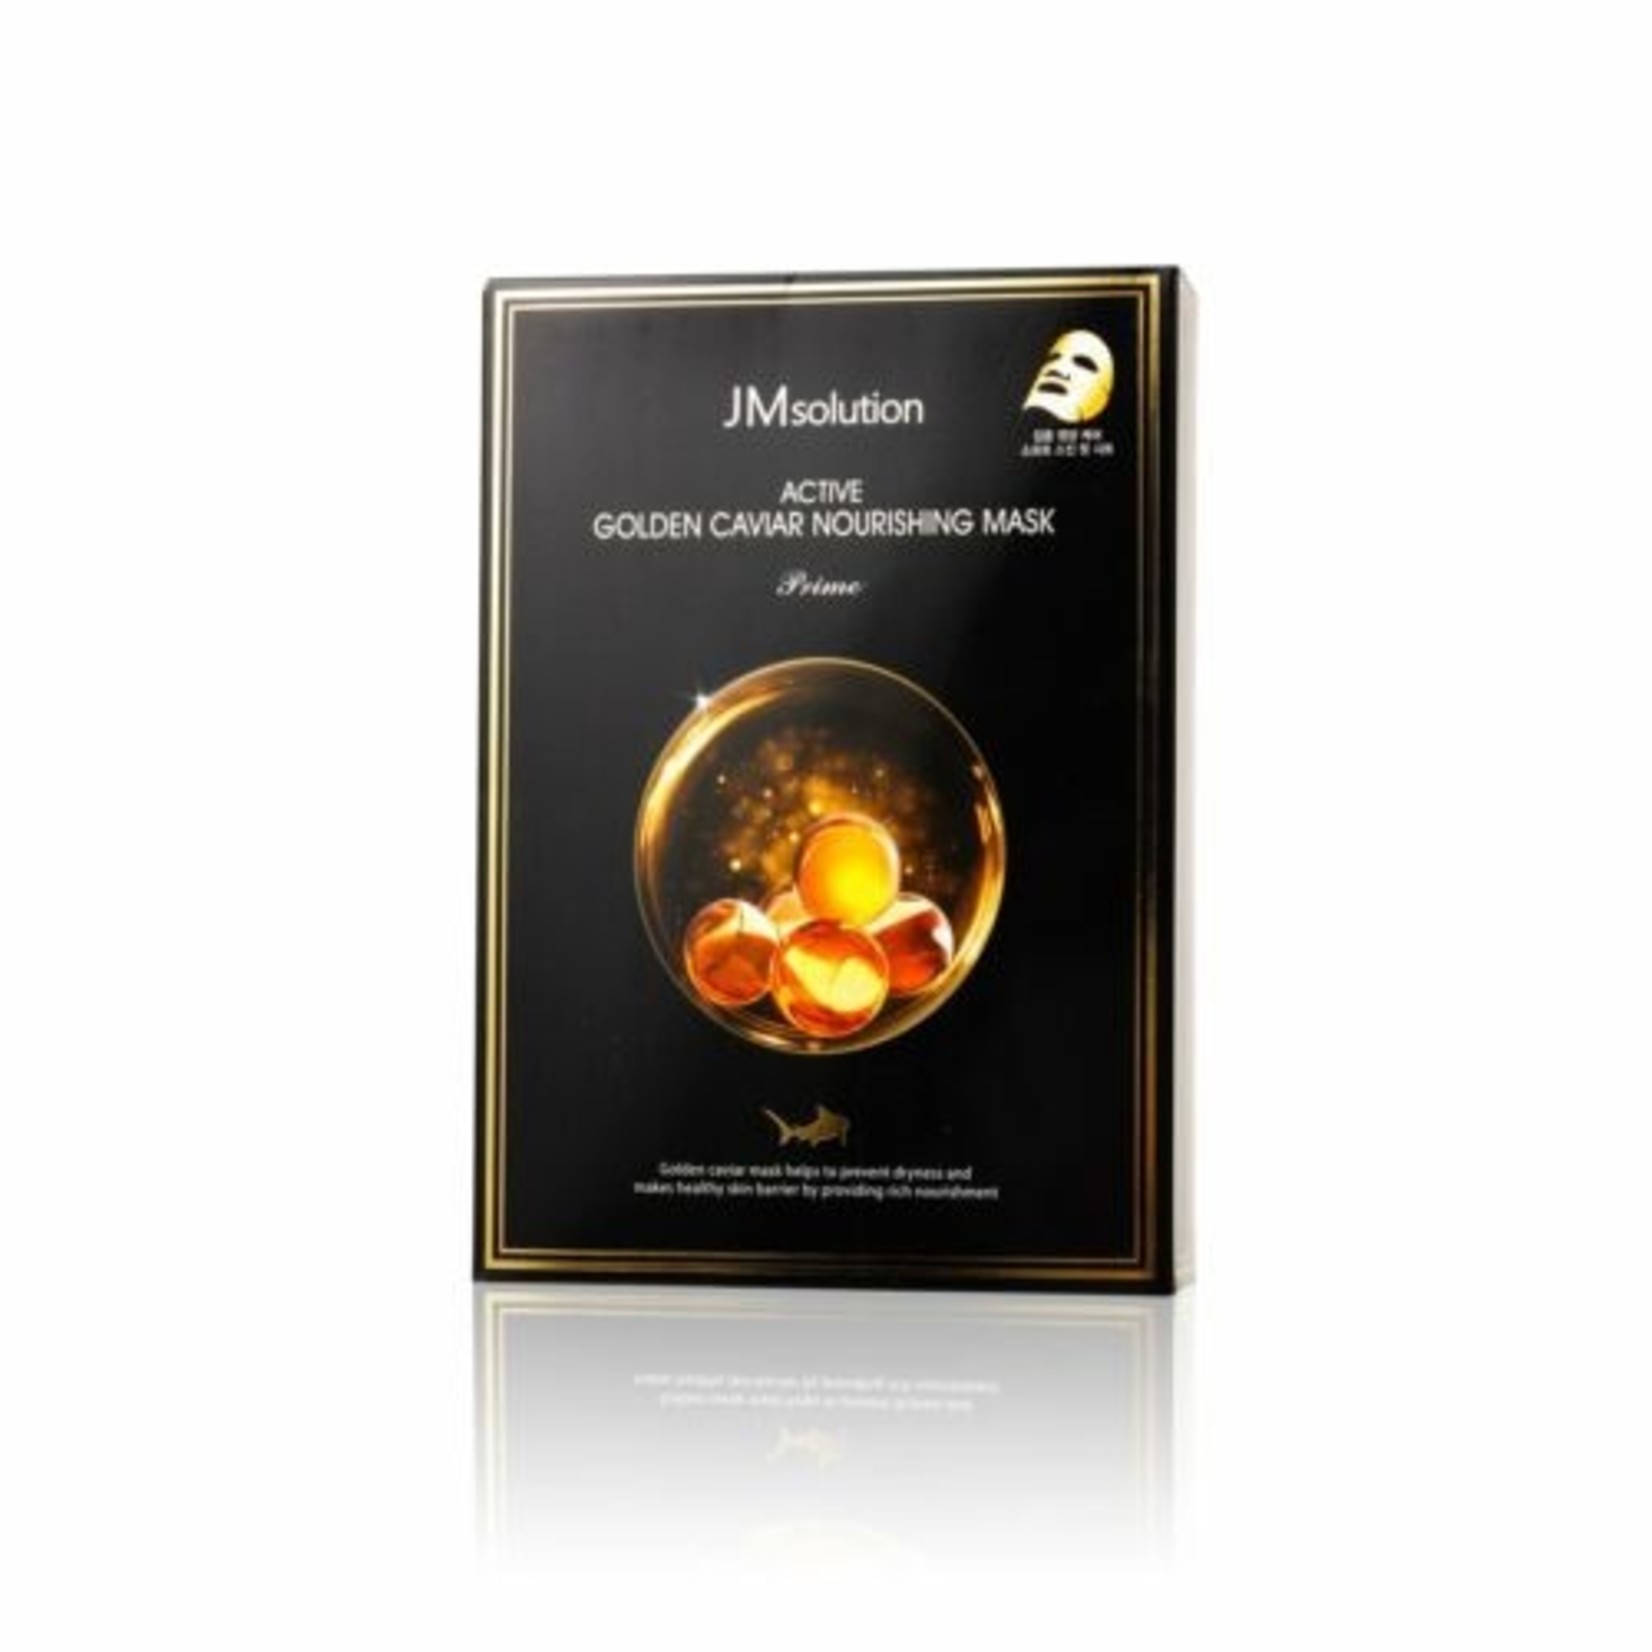 JMsolution JMsolution Active Golden Caviar Nourishing Mask Sheet 10pcs